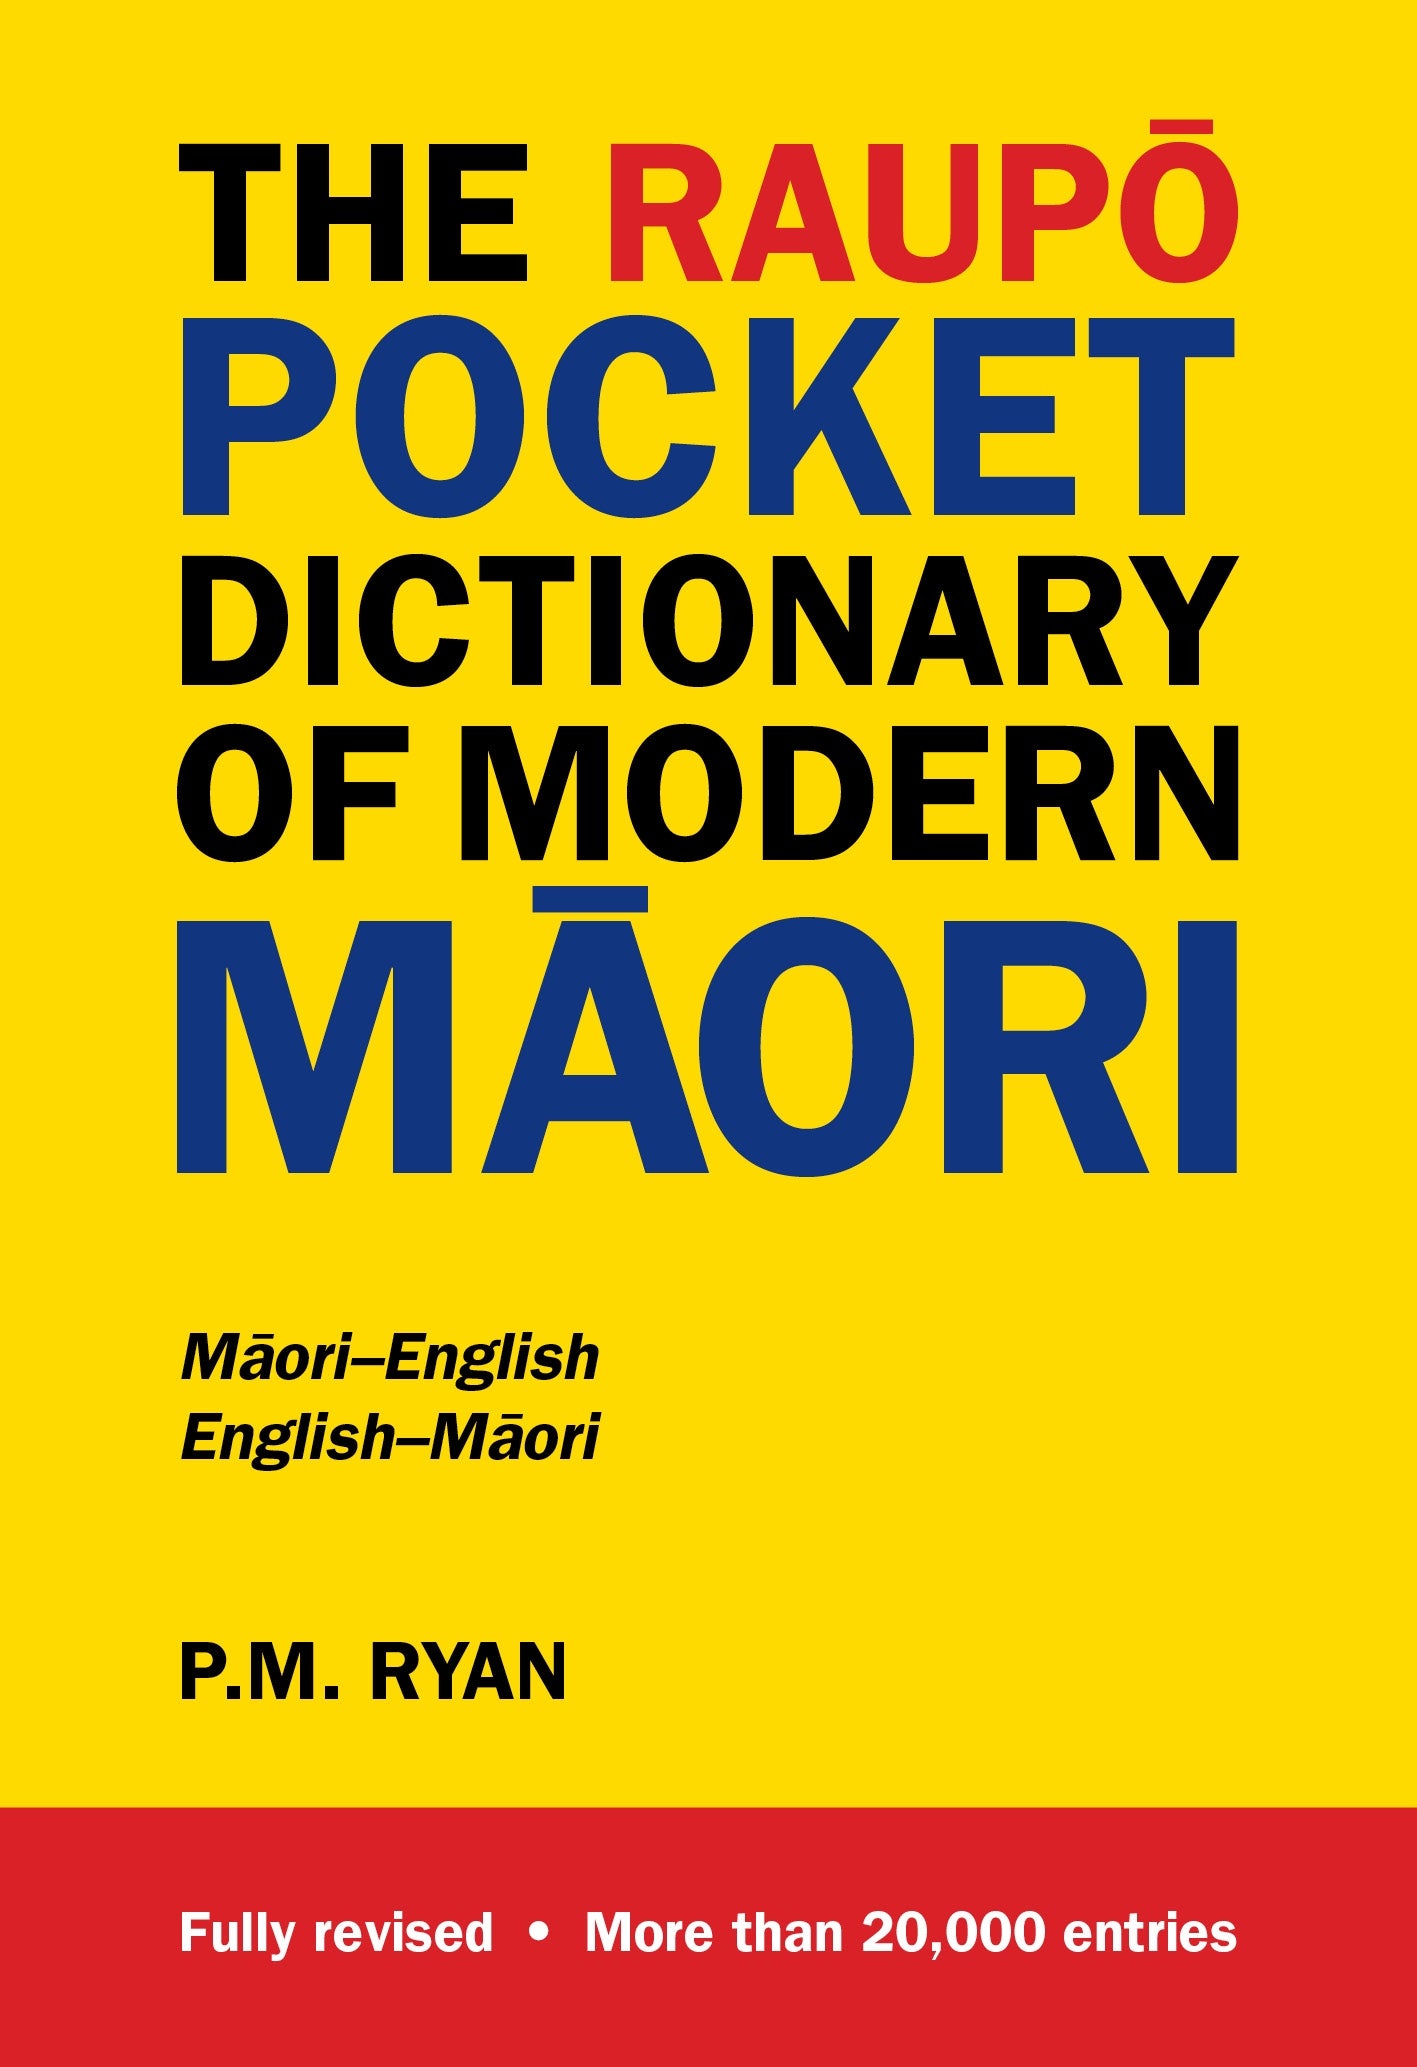 RAUPO POCKET DICTIONARY OF MODERN MAORI by P.M. Ryan - City Books & Lotto